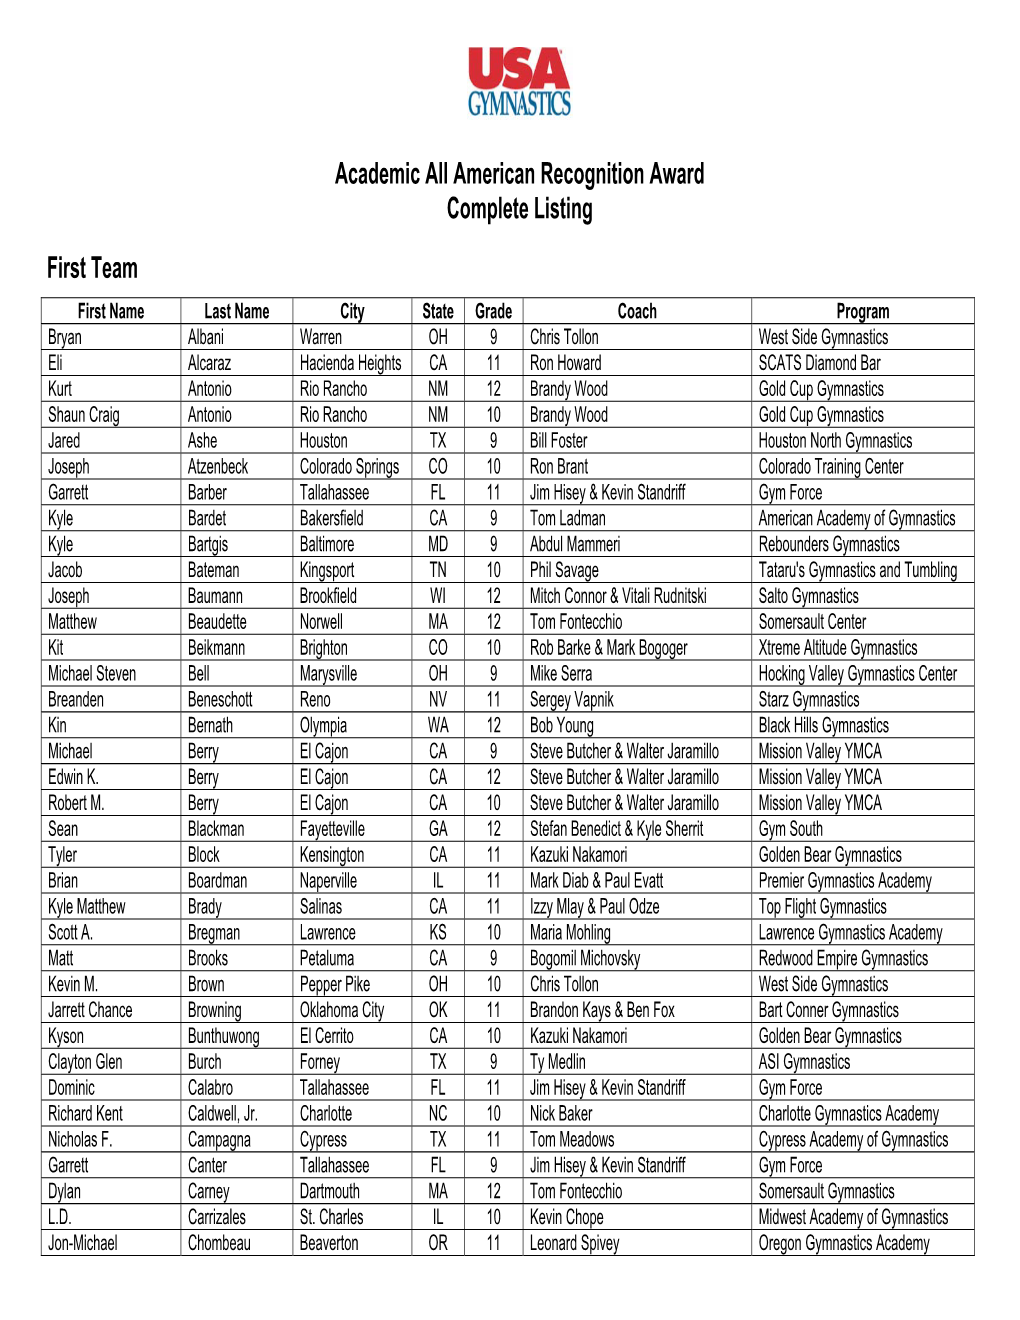 2003 Academic All-American List